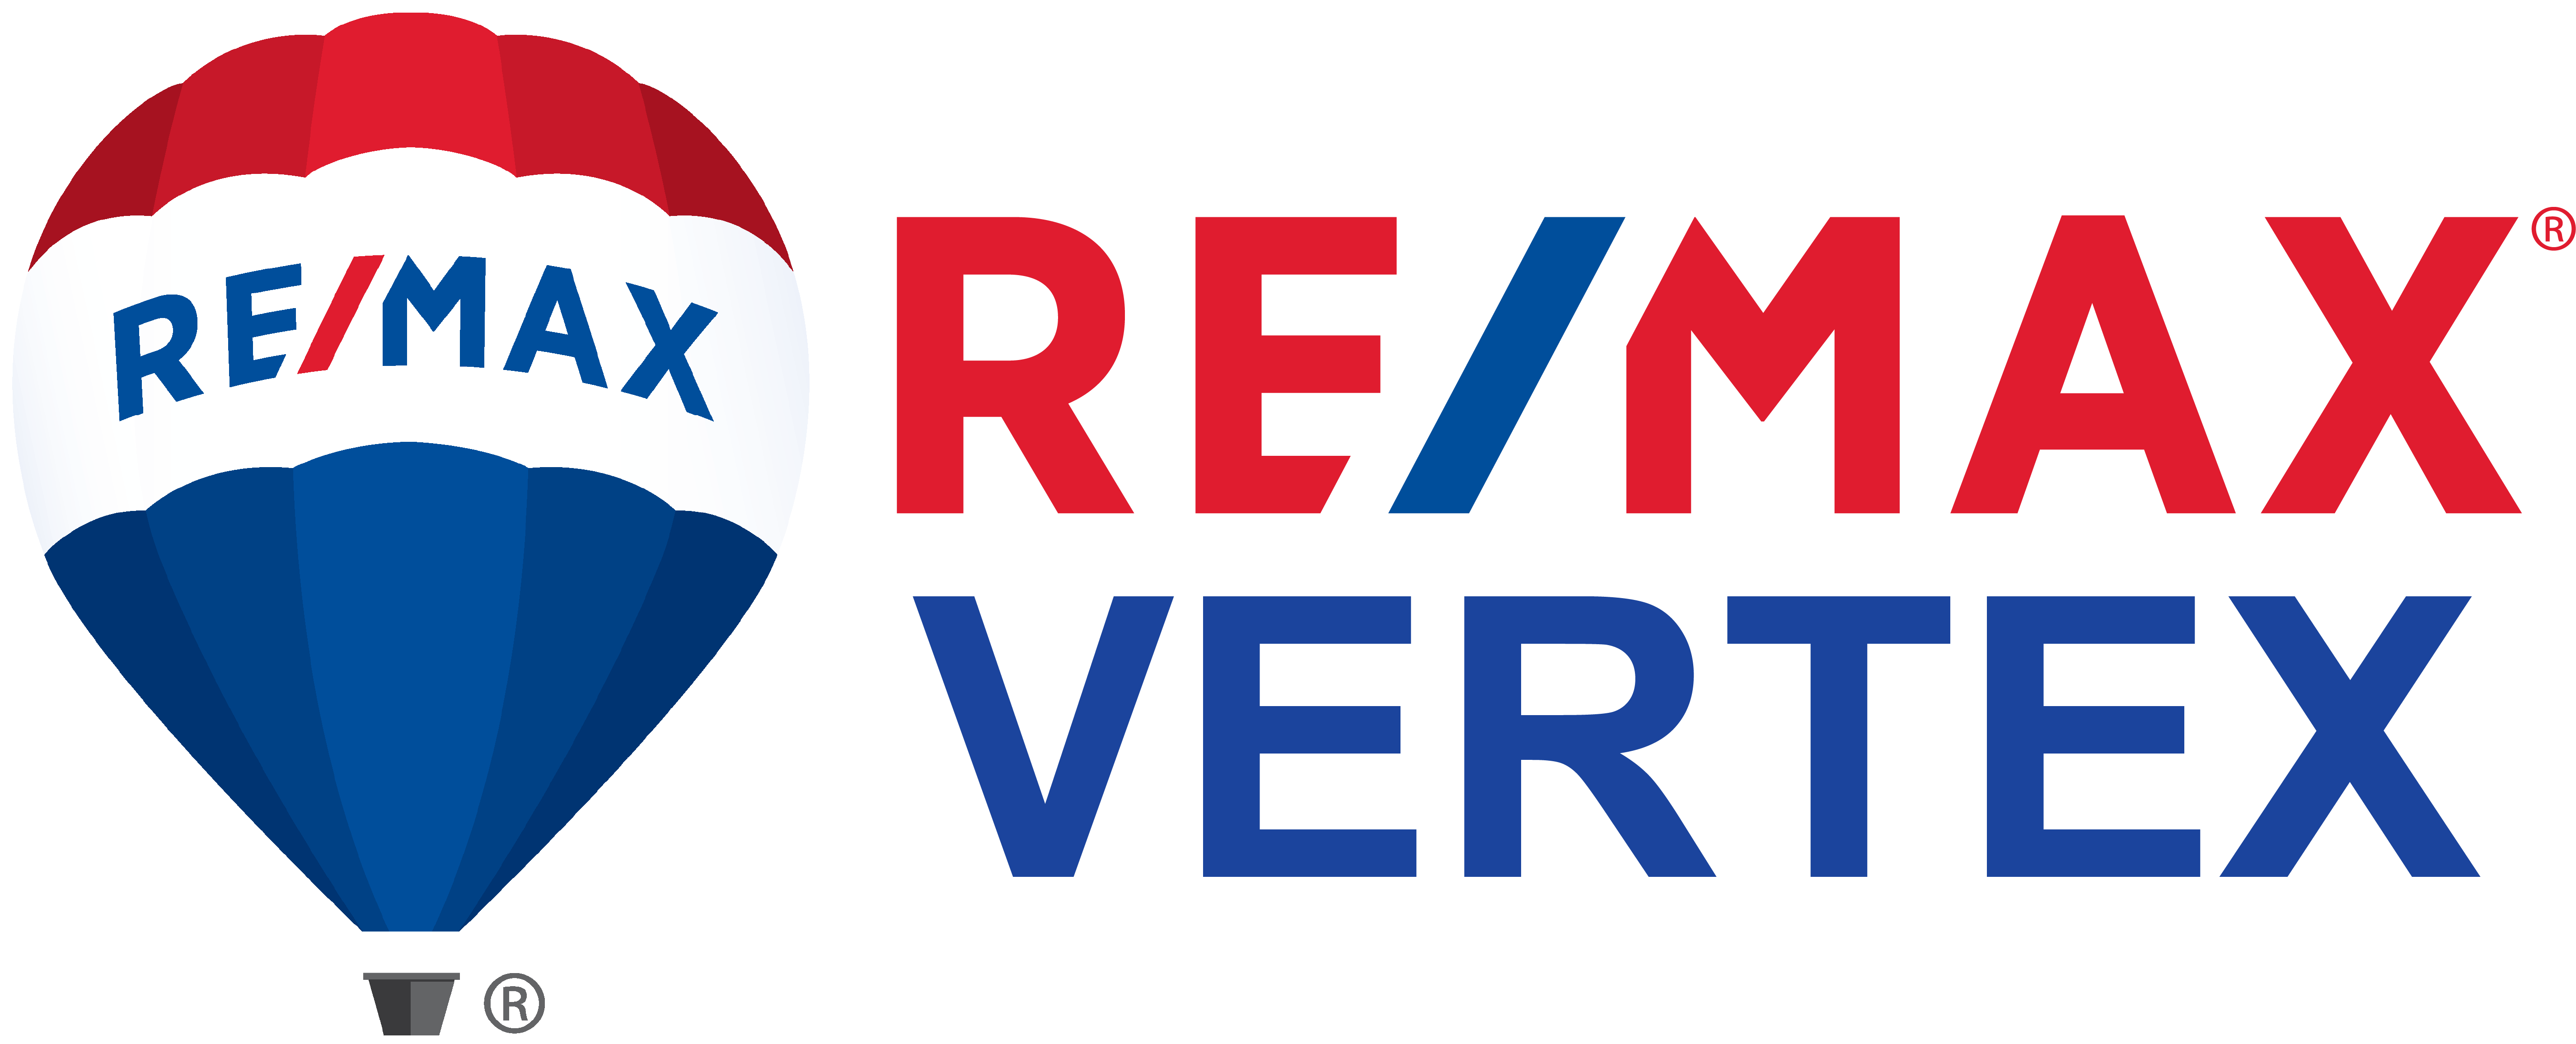 Remax Vertex - Color Transparent